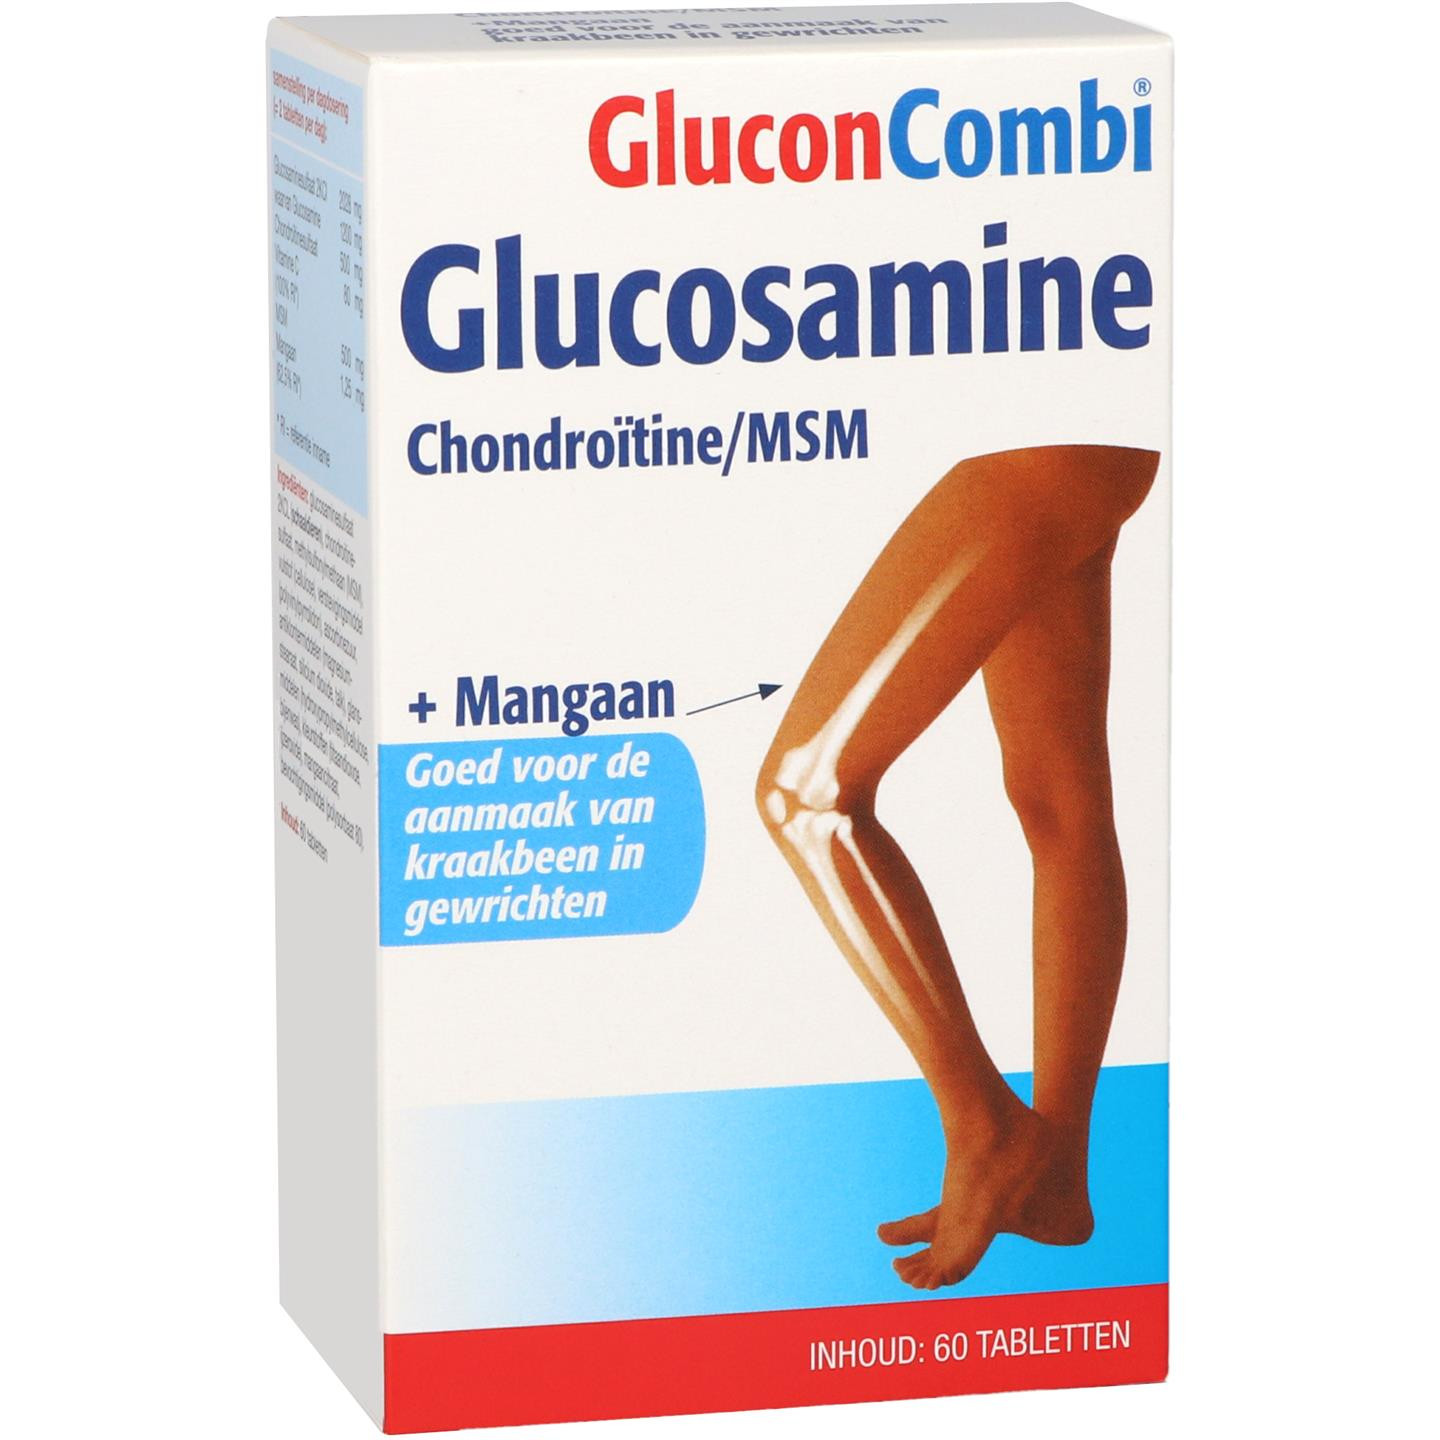 GluconCombi Glucosamine